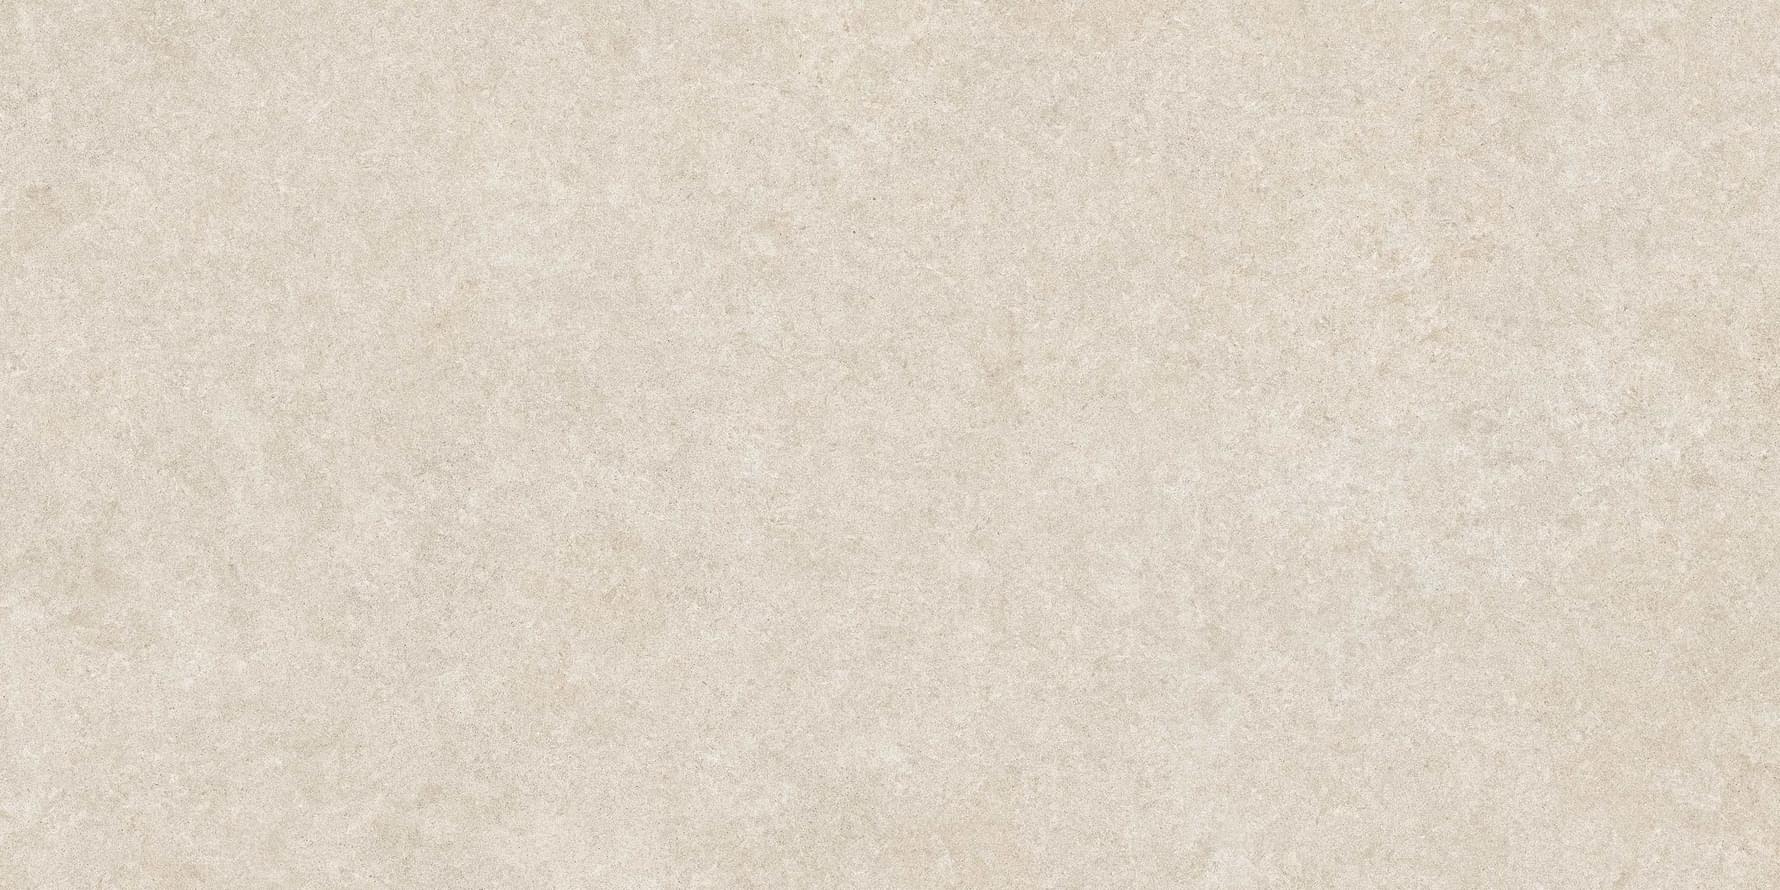 Cerim Elemental Stone White Sandstone Grip 30x60